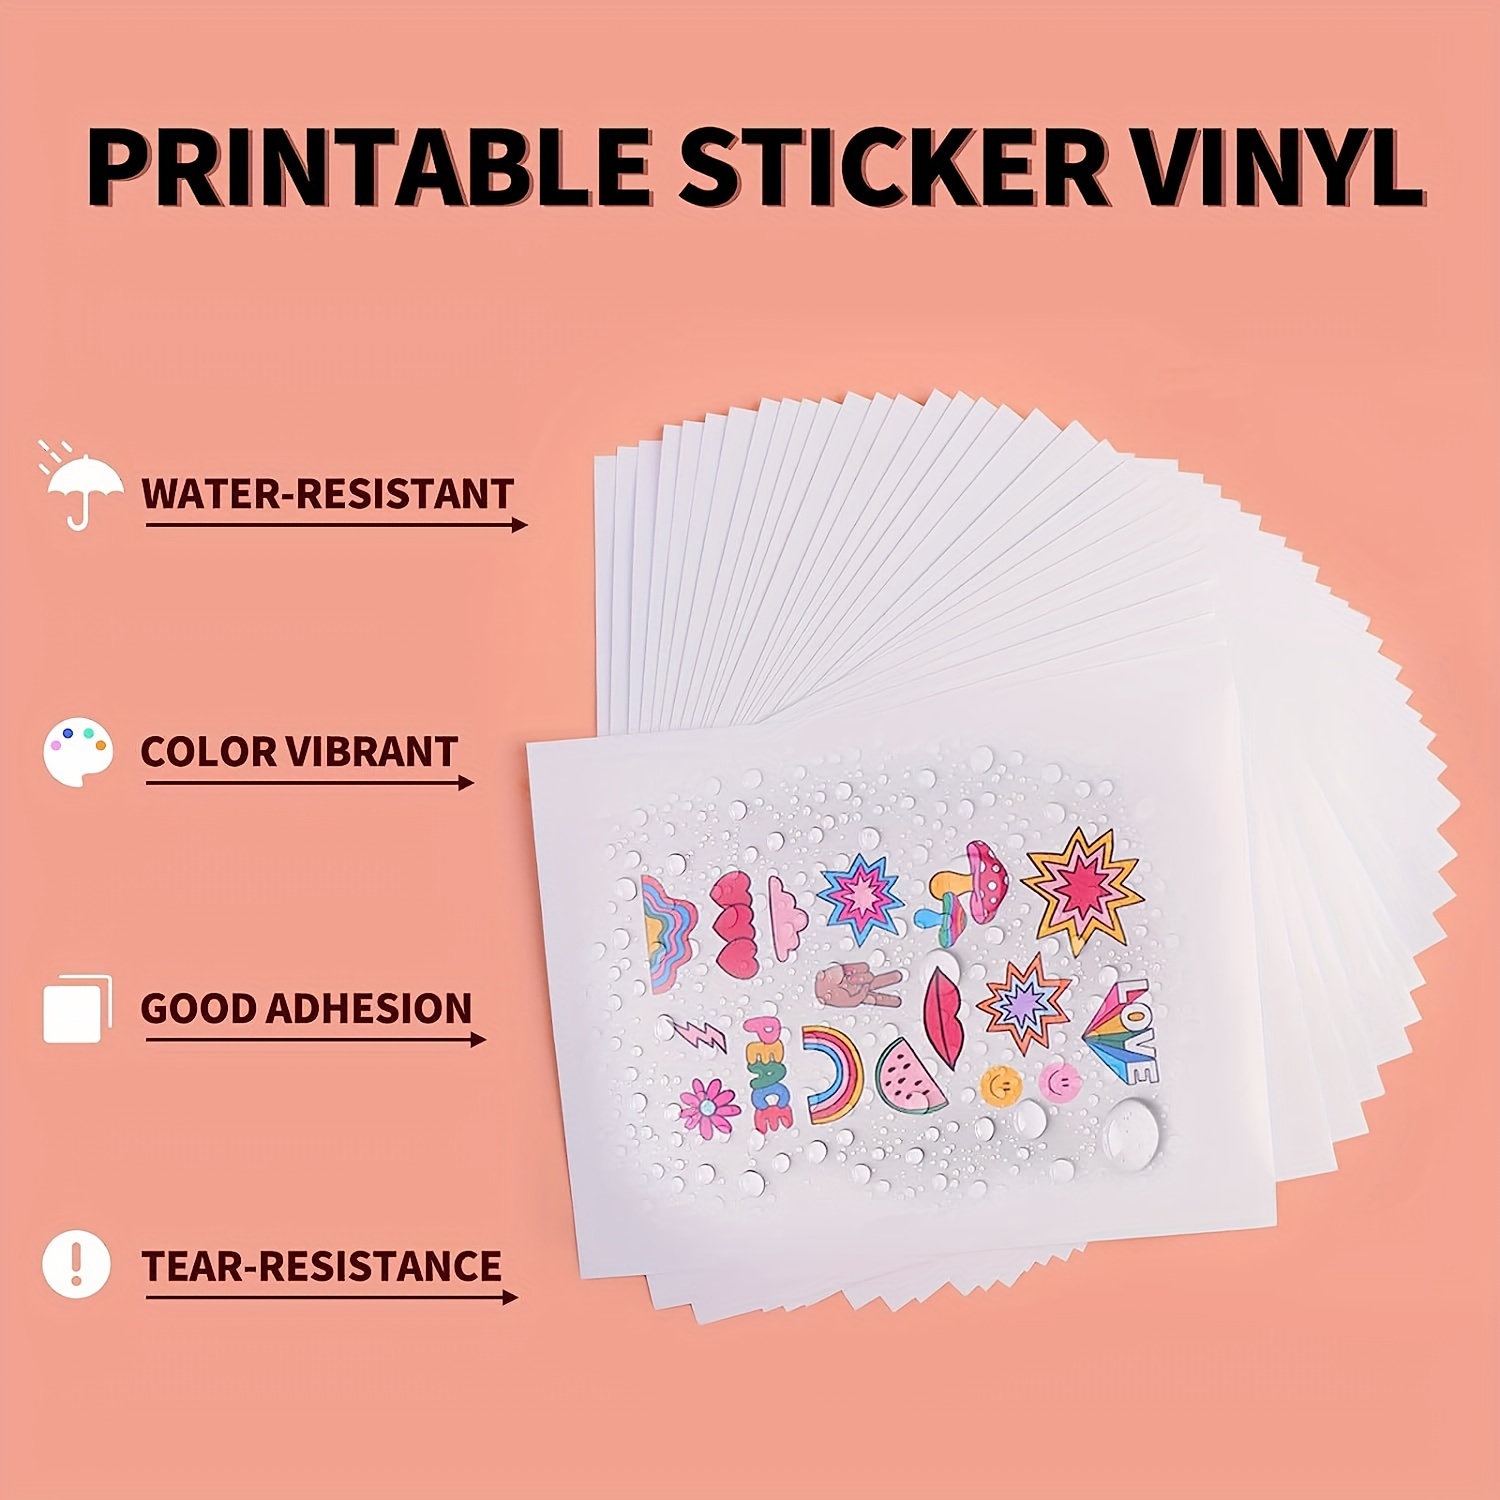 HTVRONT 25 Sheets 8.5x11 Glossy White Printable Vinyl Sticker